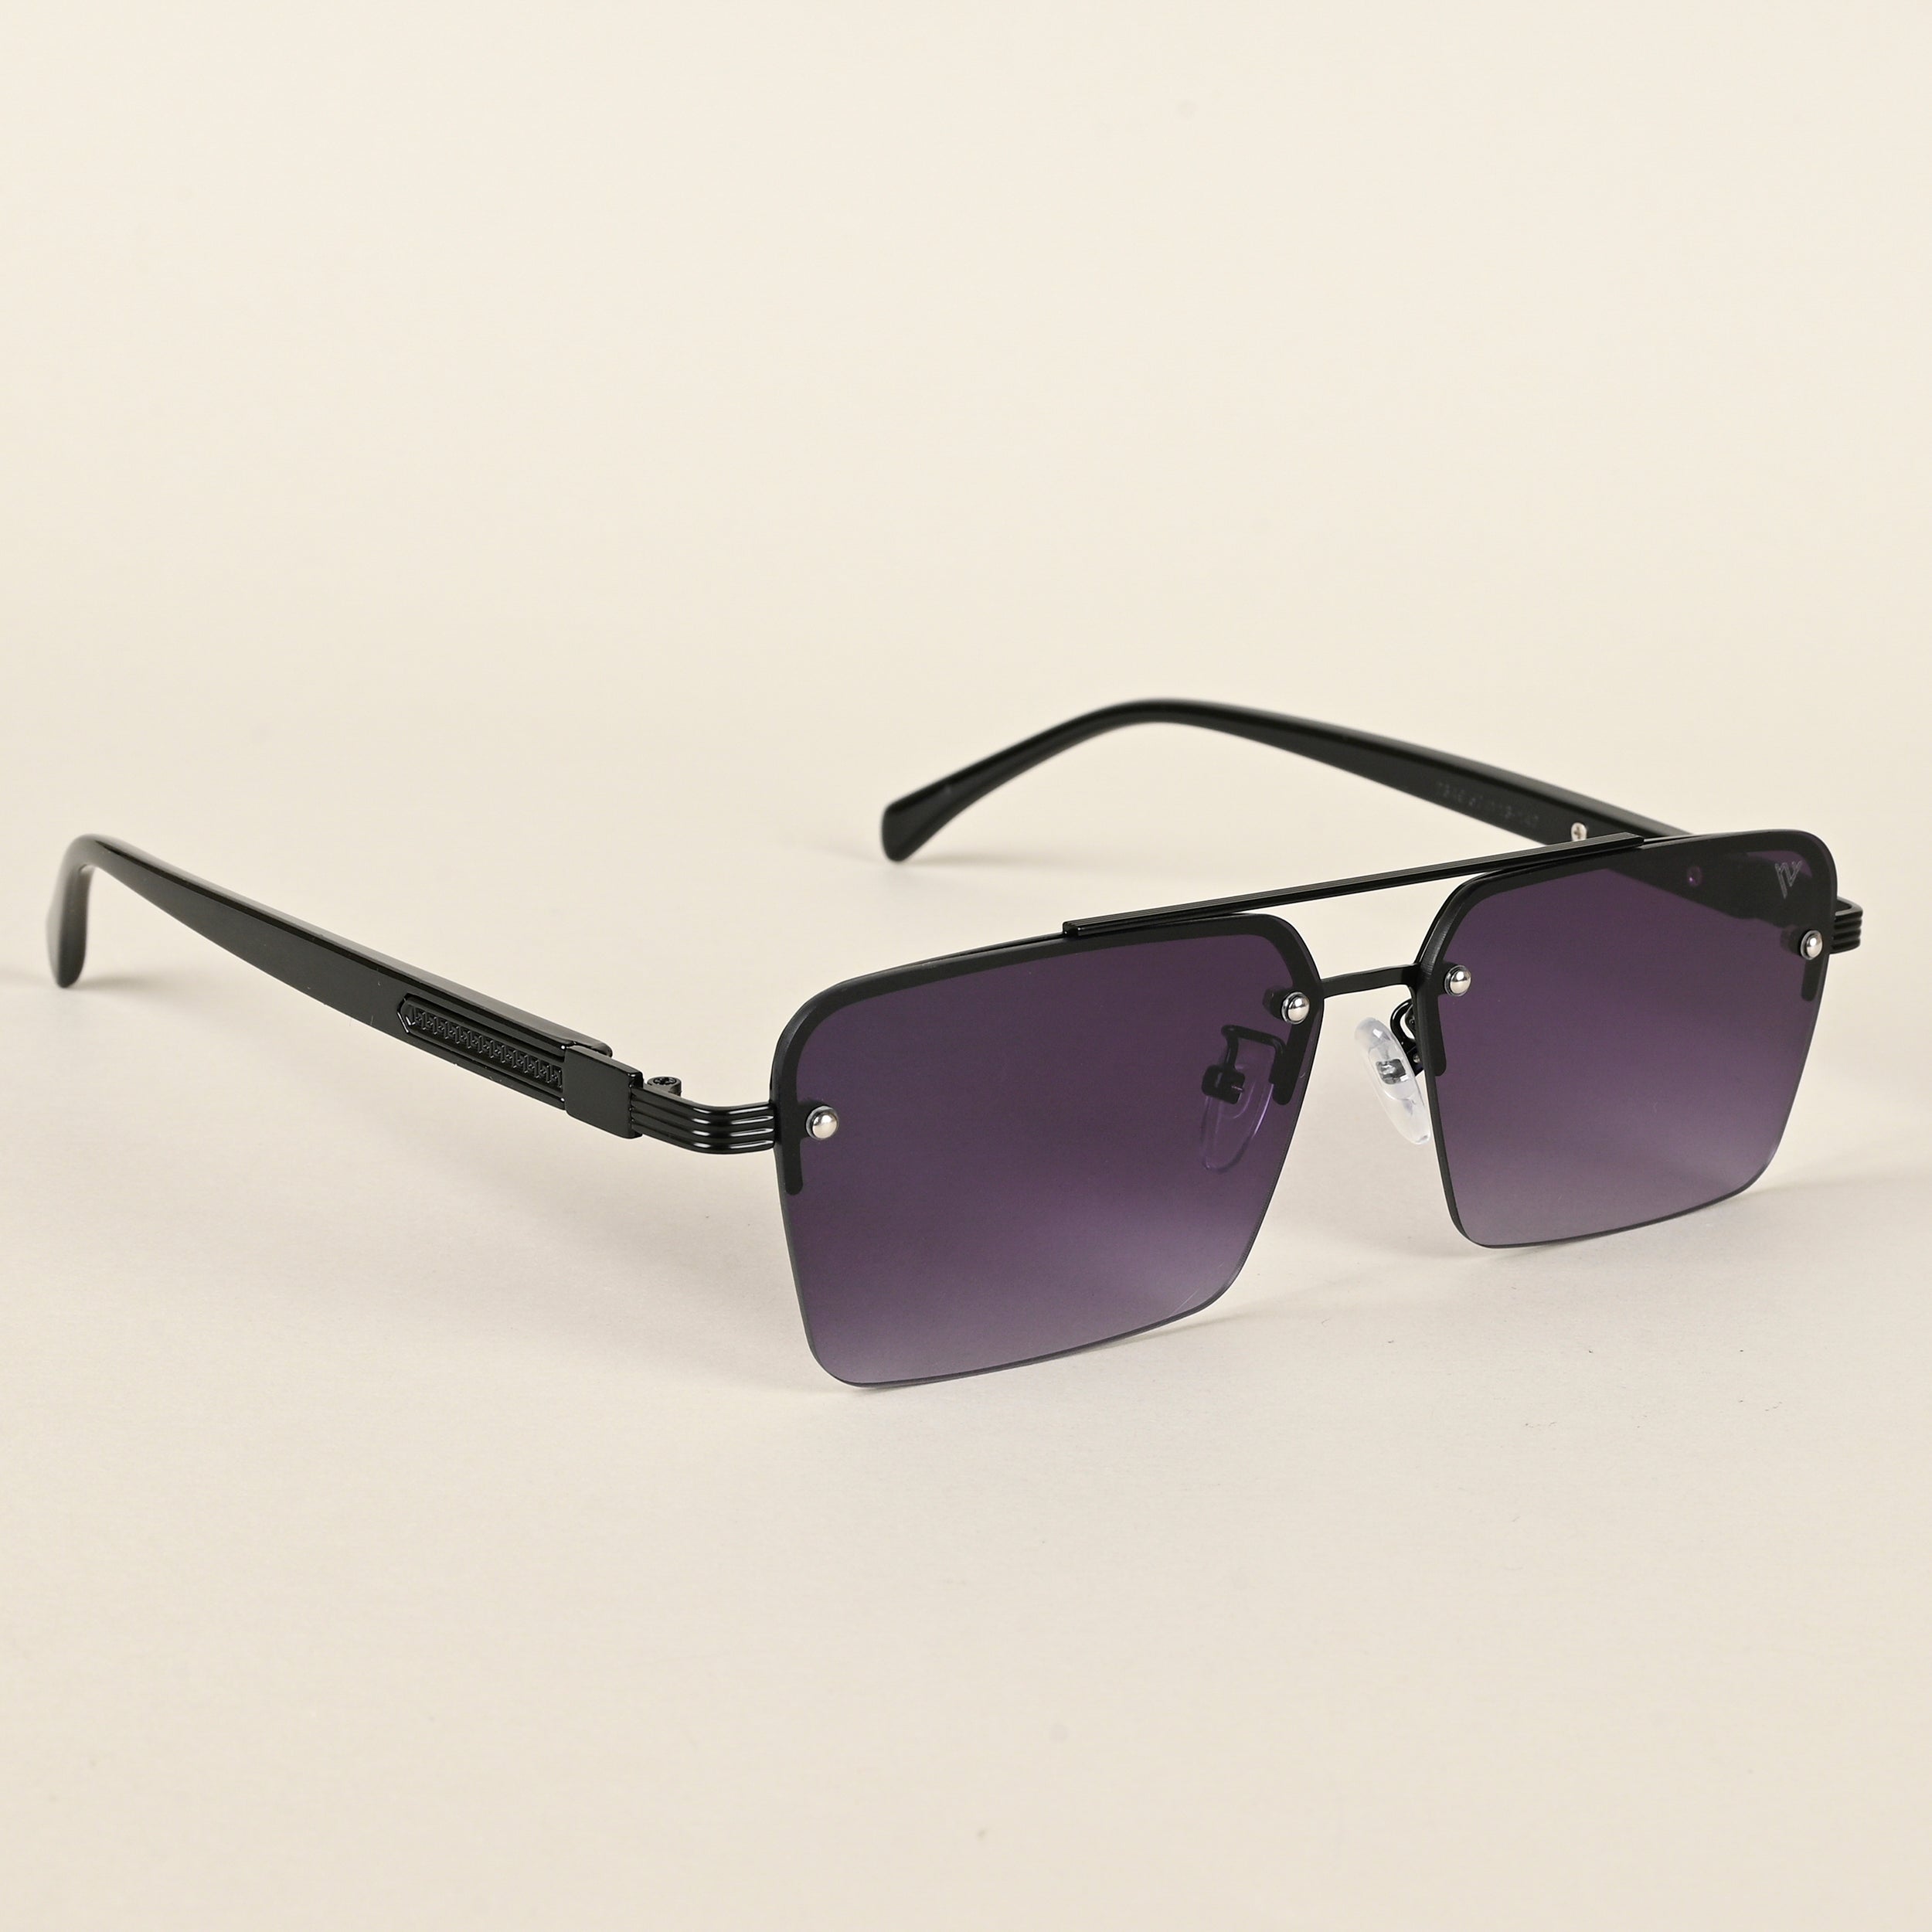 Voyage Purple Rectangle Sunglasses for Men & Women - MG4501